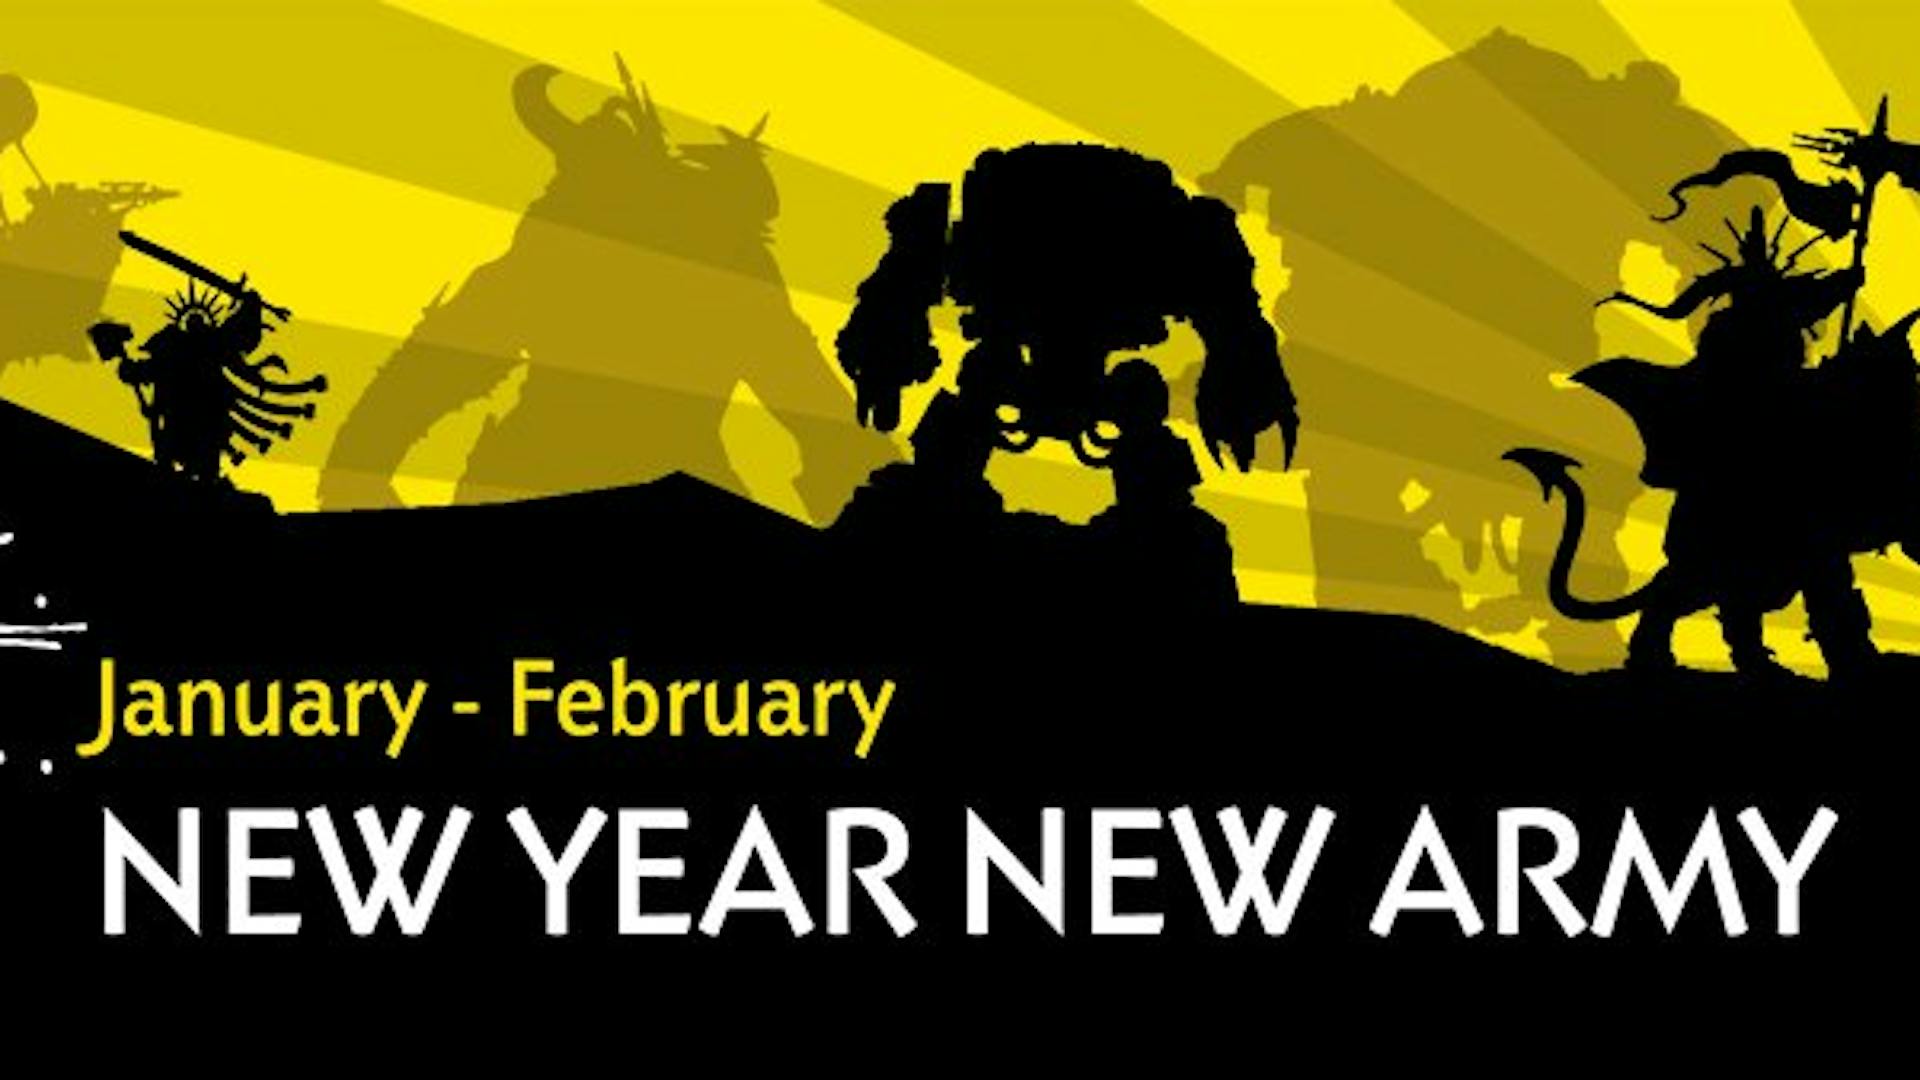 January - February: New year, new army